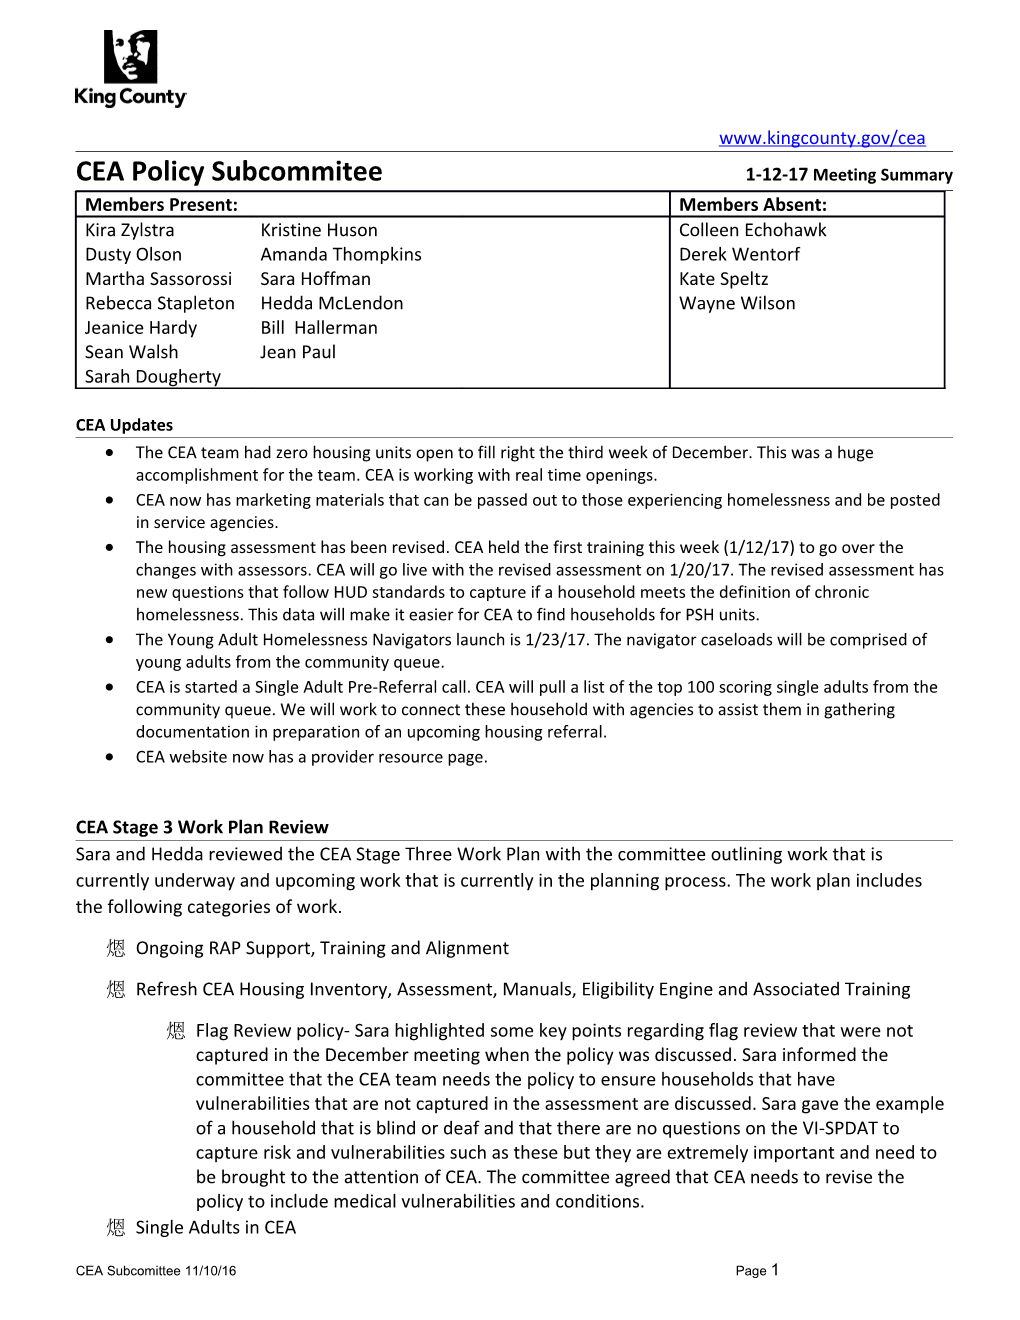 CEA Policy Subcommitee 1-12-17 Meeting Summary